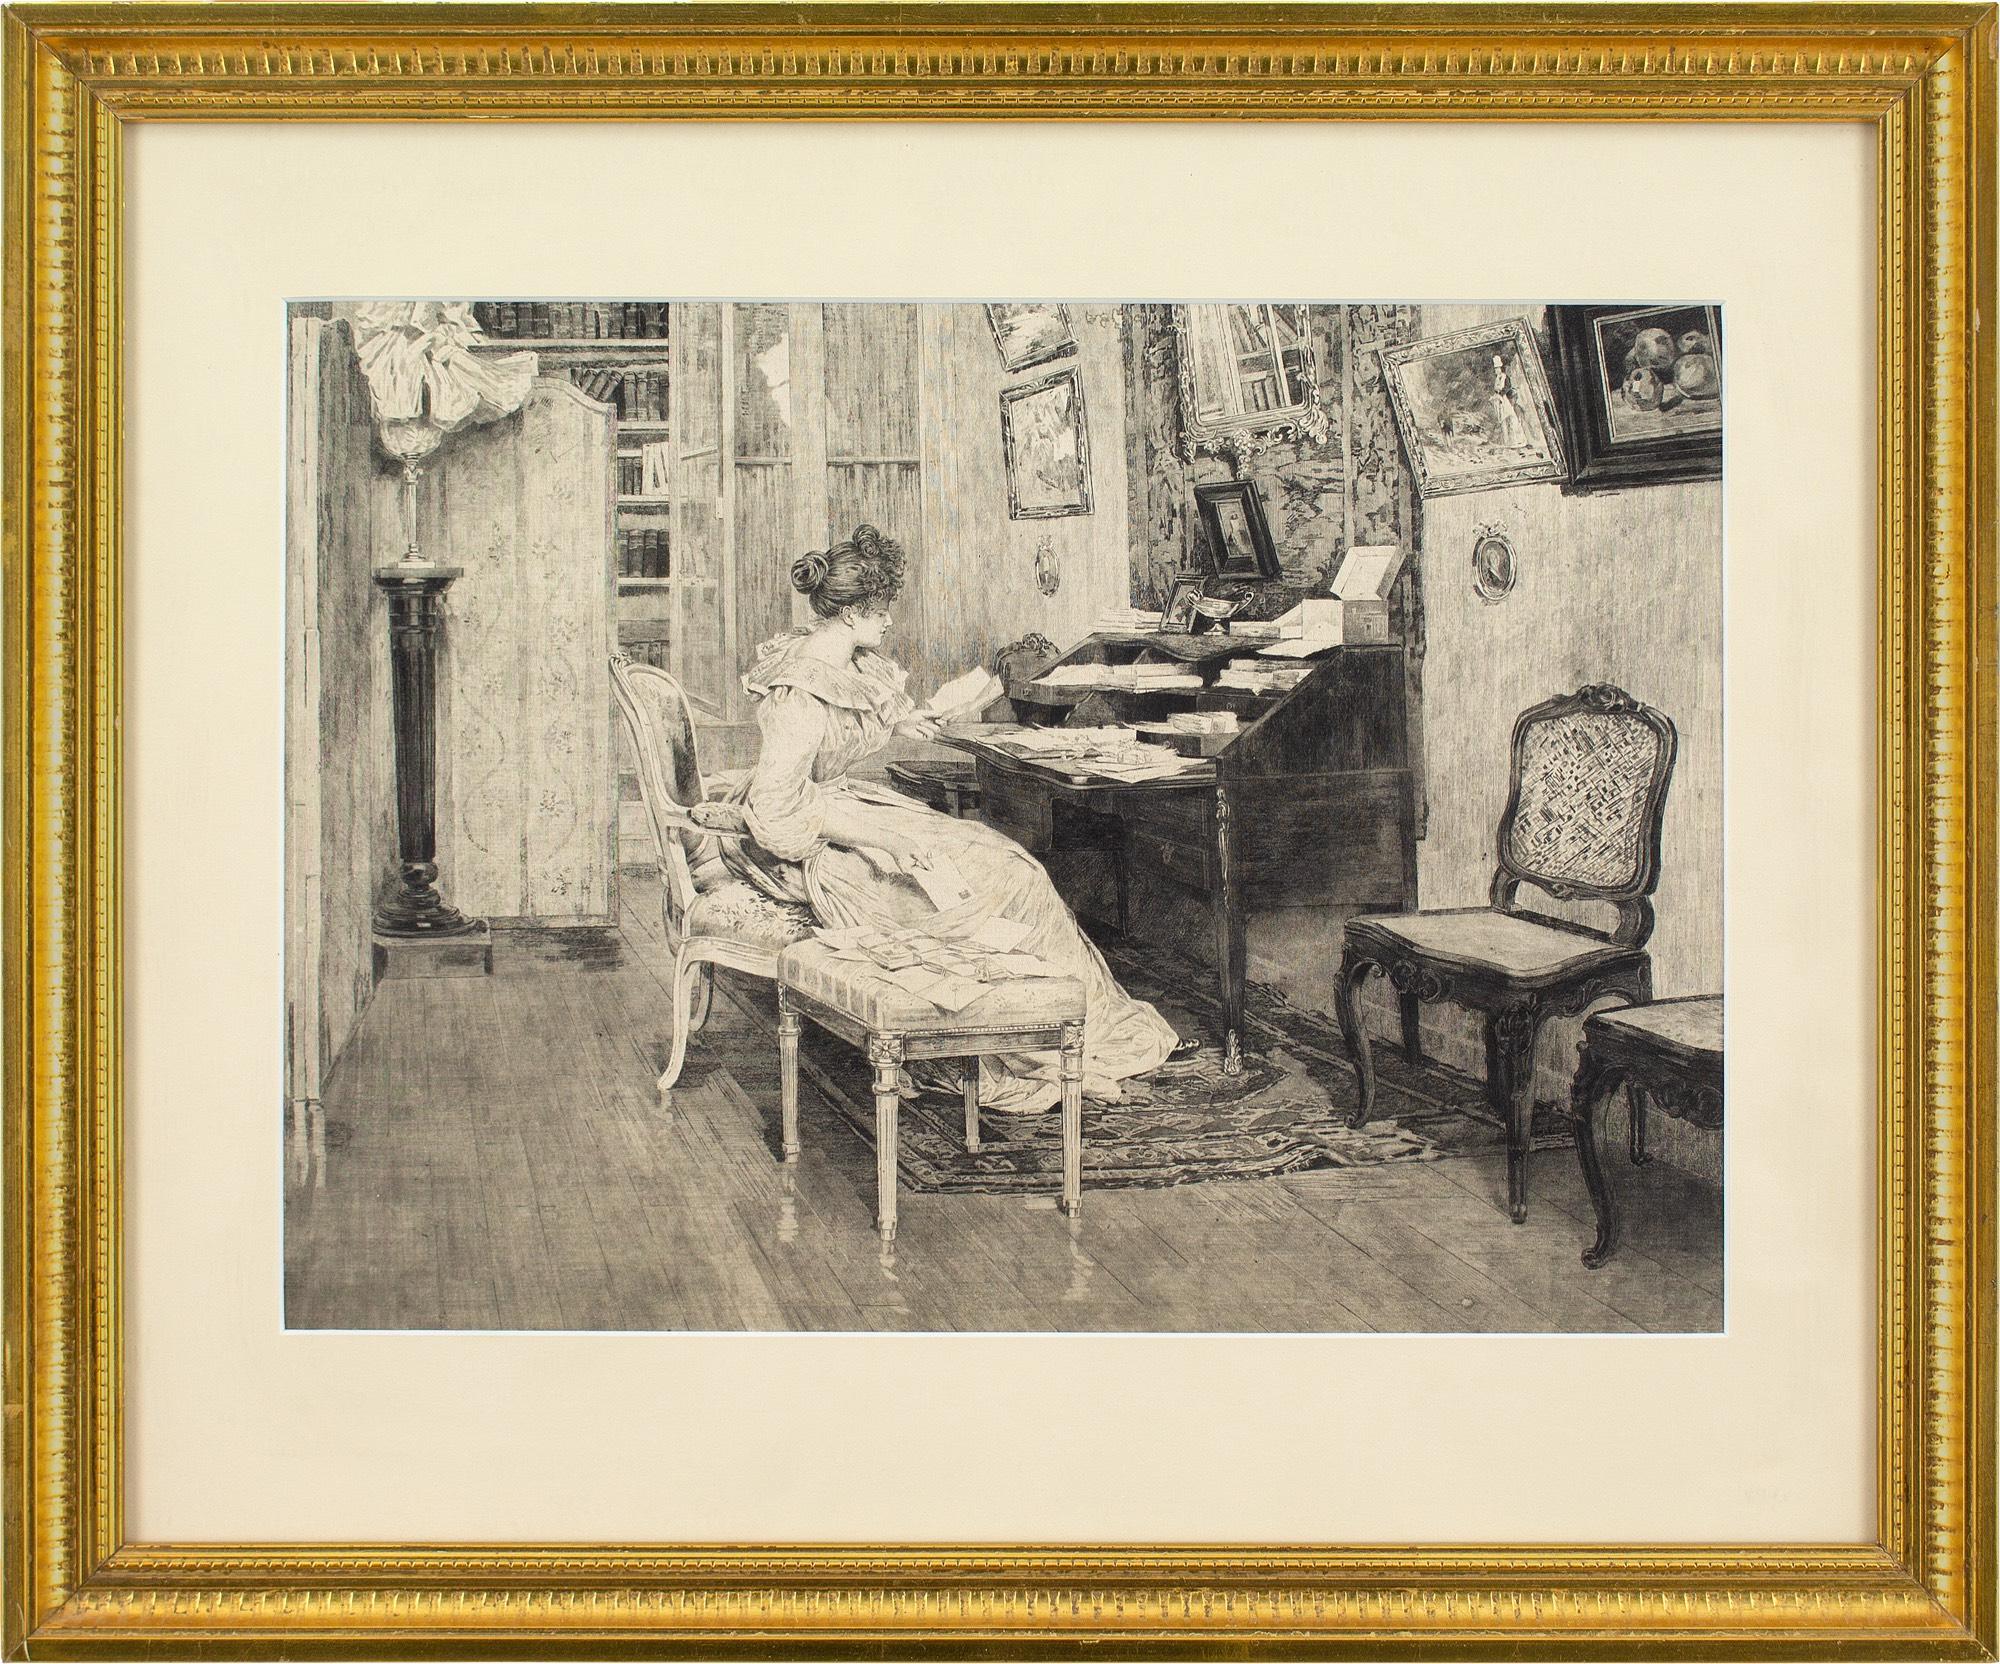 Unknown Figurative Print - Late 19th-Century British School, Interior Scene With Woman Reading